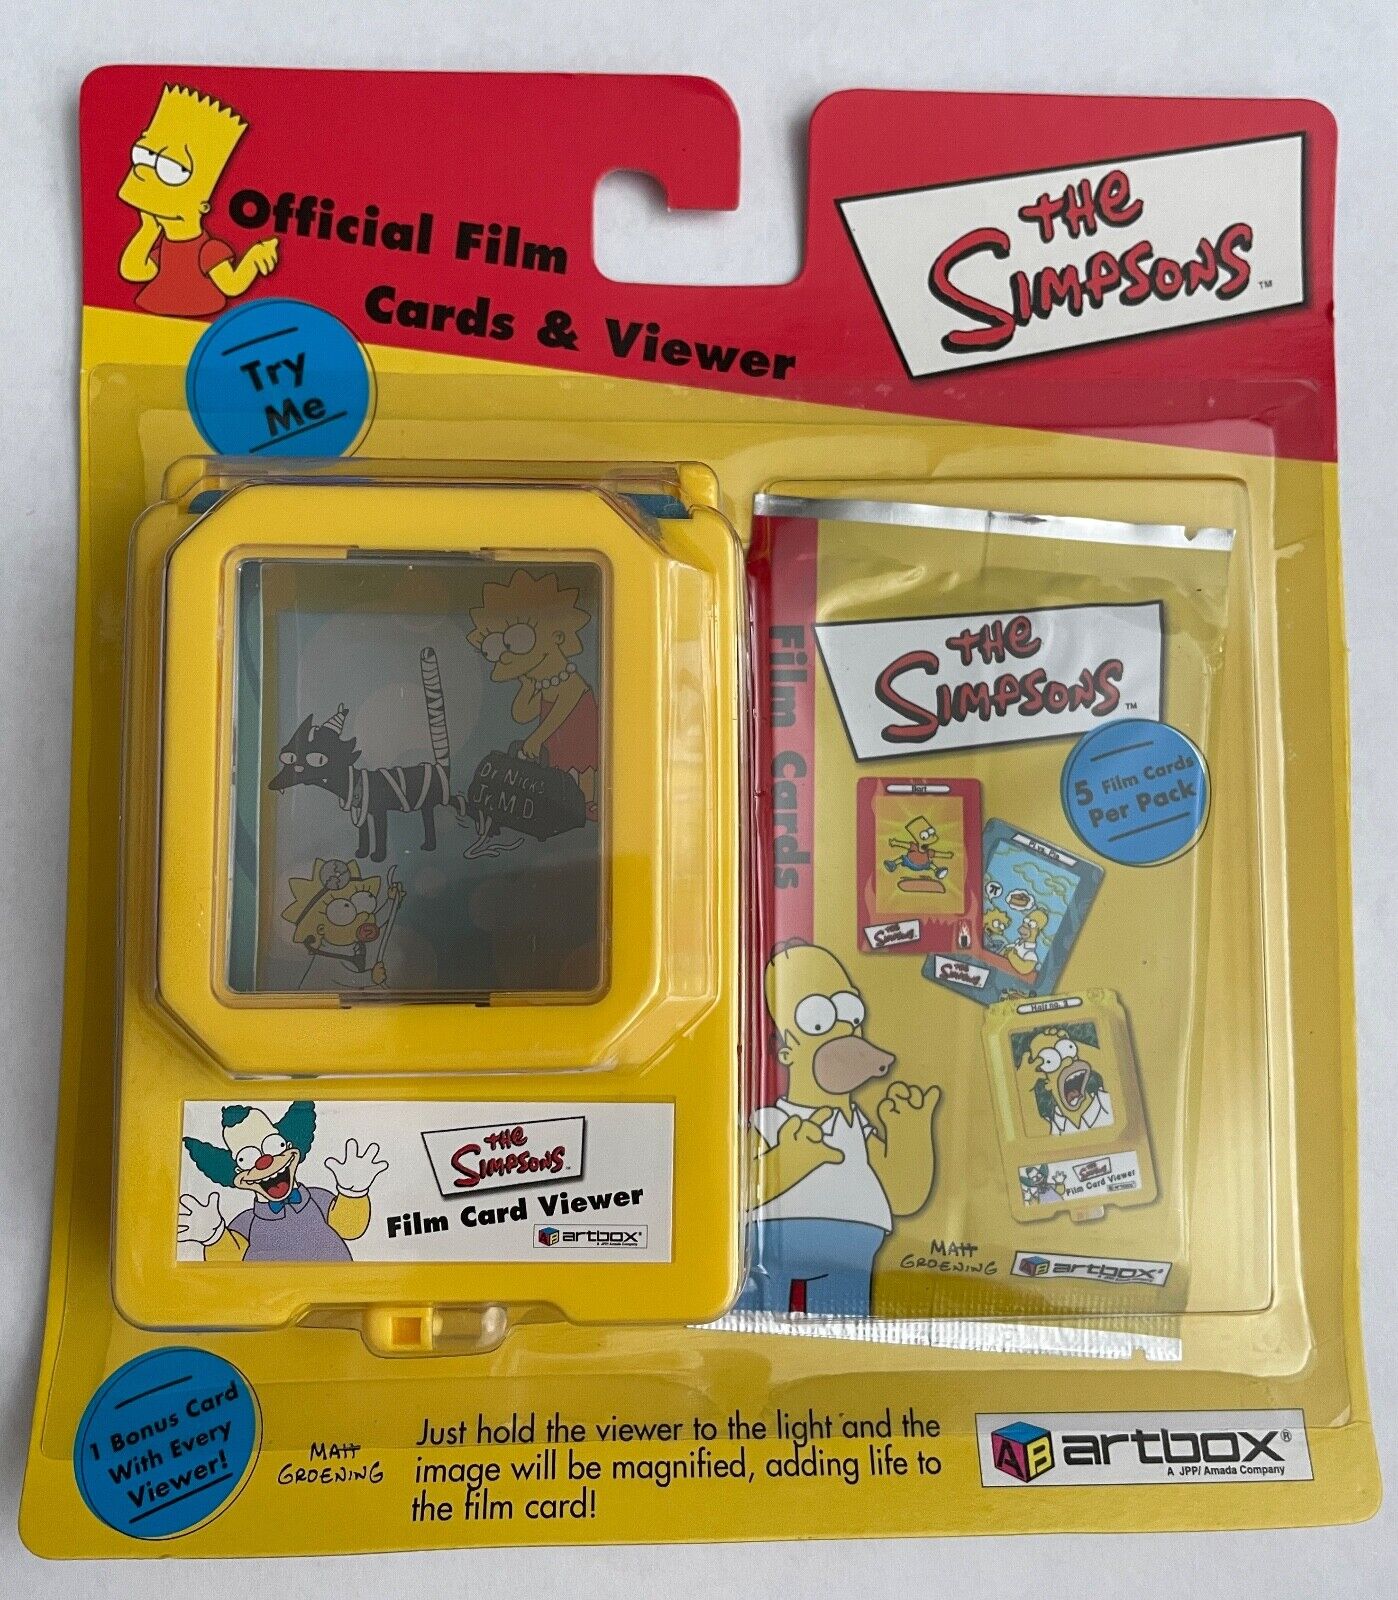 THE SIMPSONS OFFICIAL FILM CARDZ SET VIEWER, BLISTER PACK & BONUS CARD BY ARTBOX